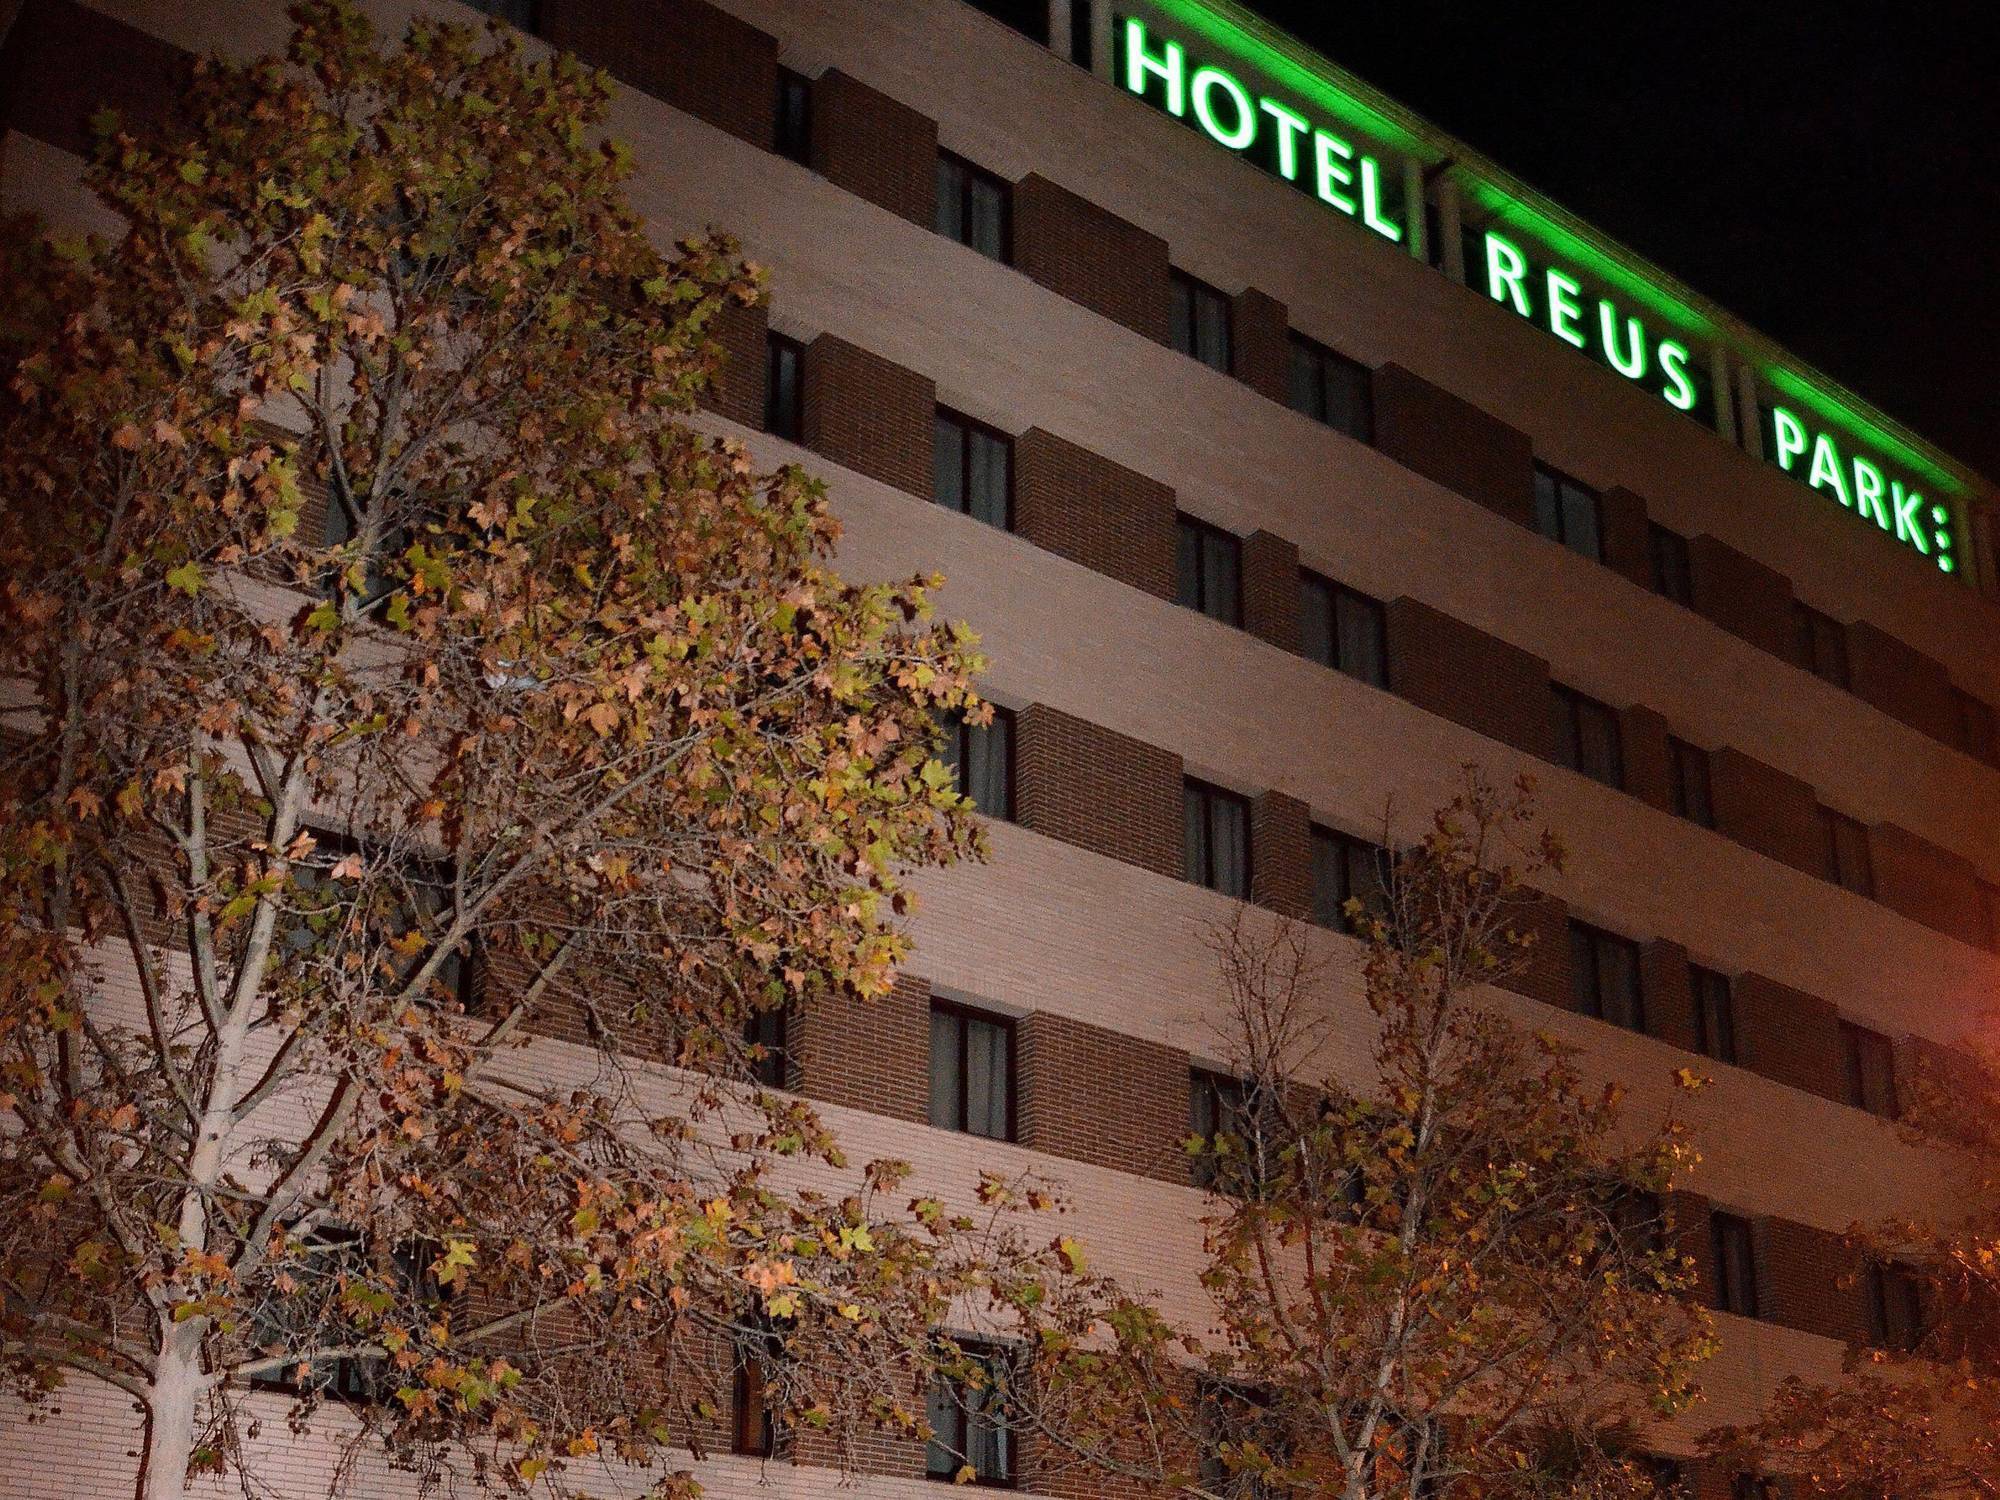 Hotel Reus Park Exterior photo